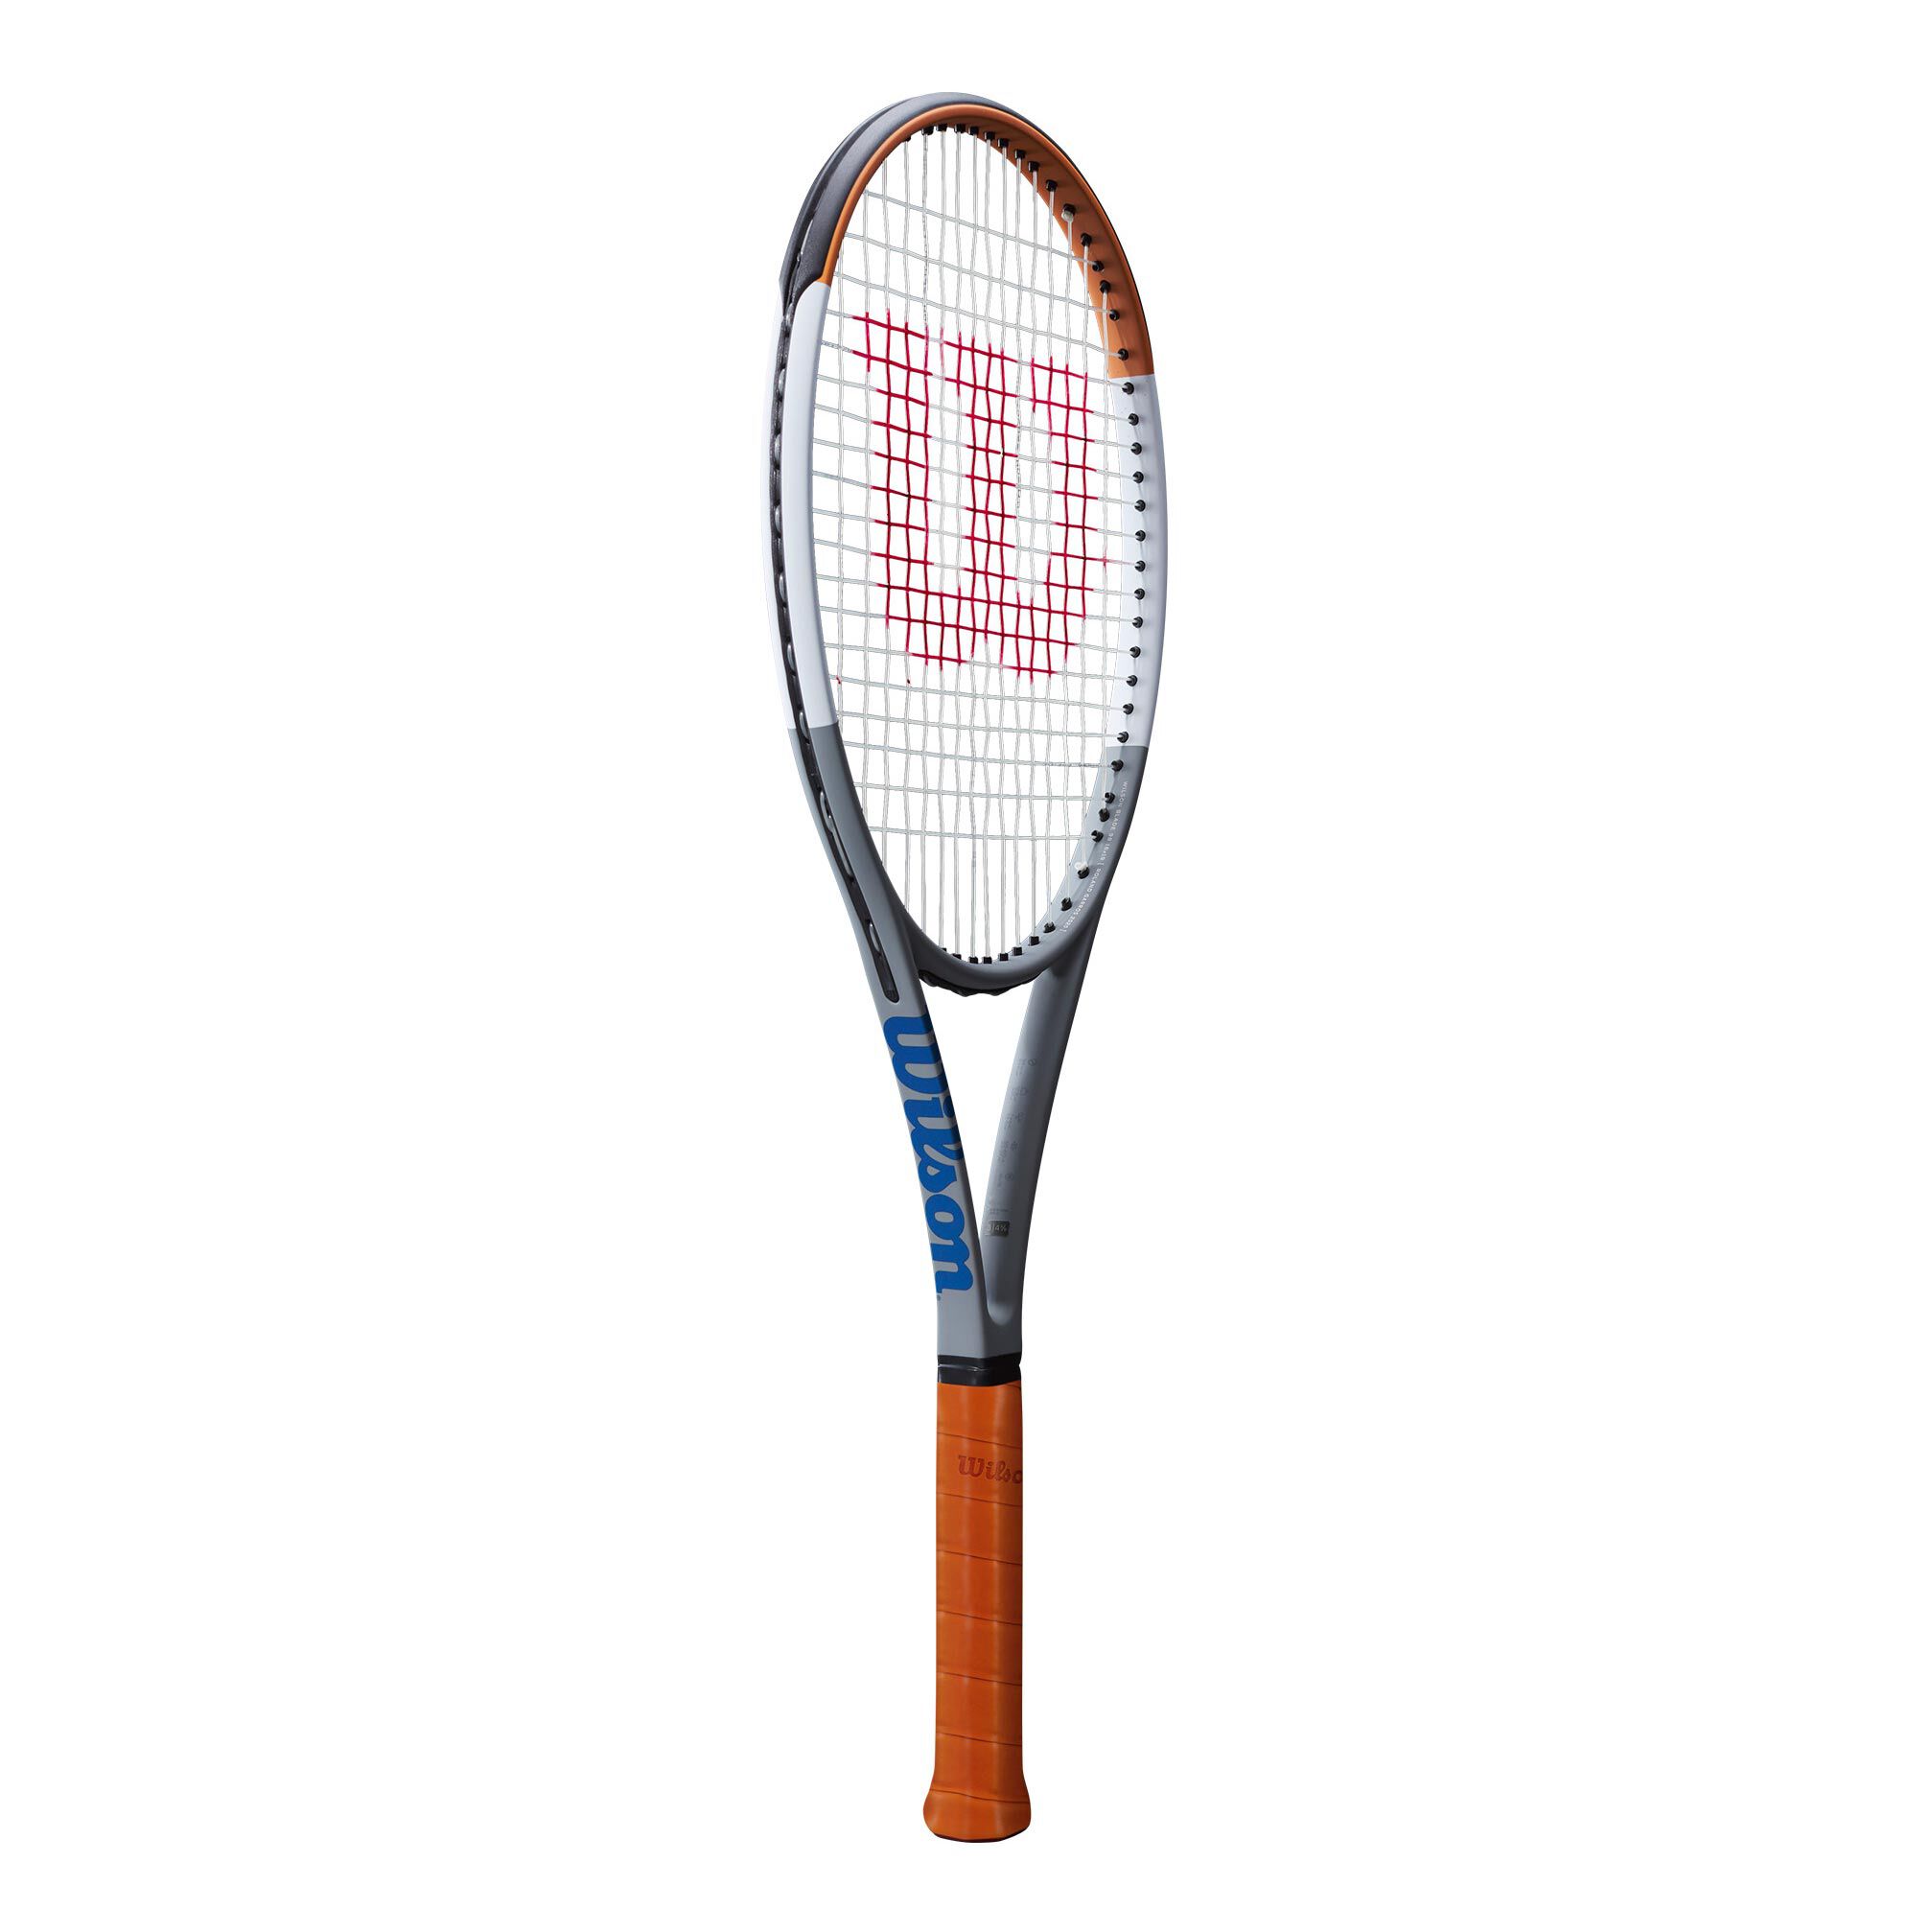 Buy Wilson Roland Garros Blade 98 LTD V7.0 Tour Racket online